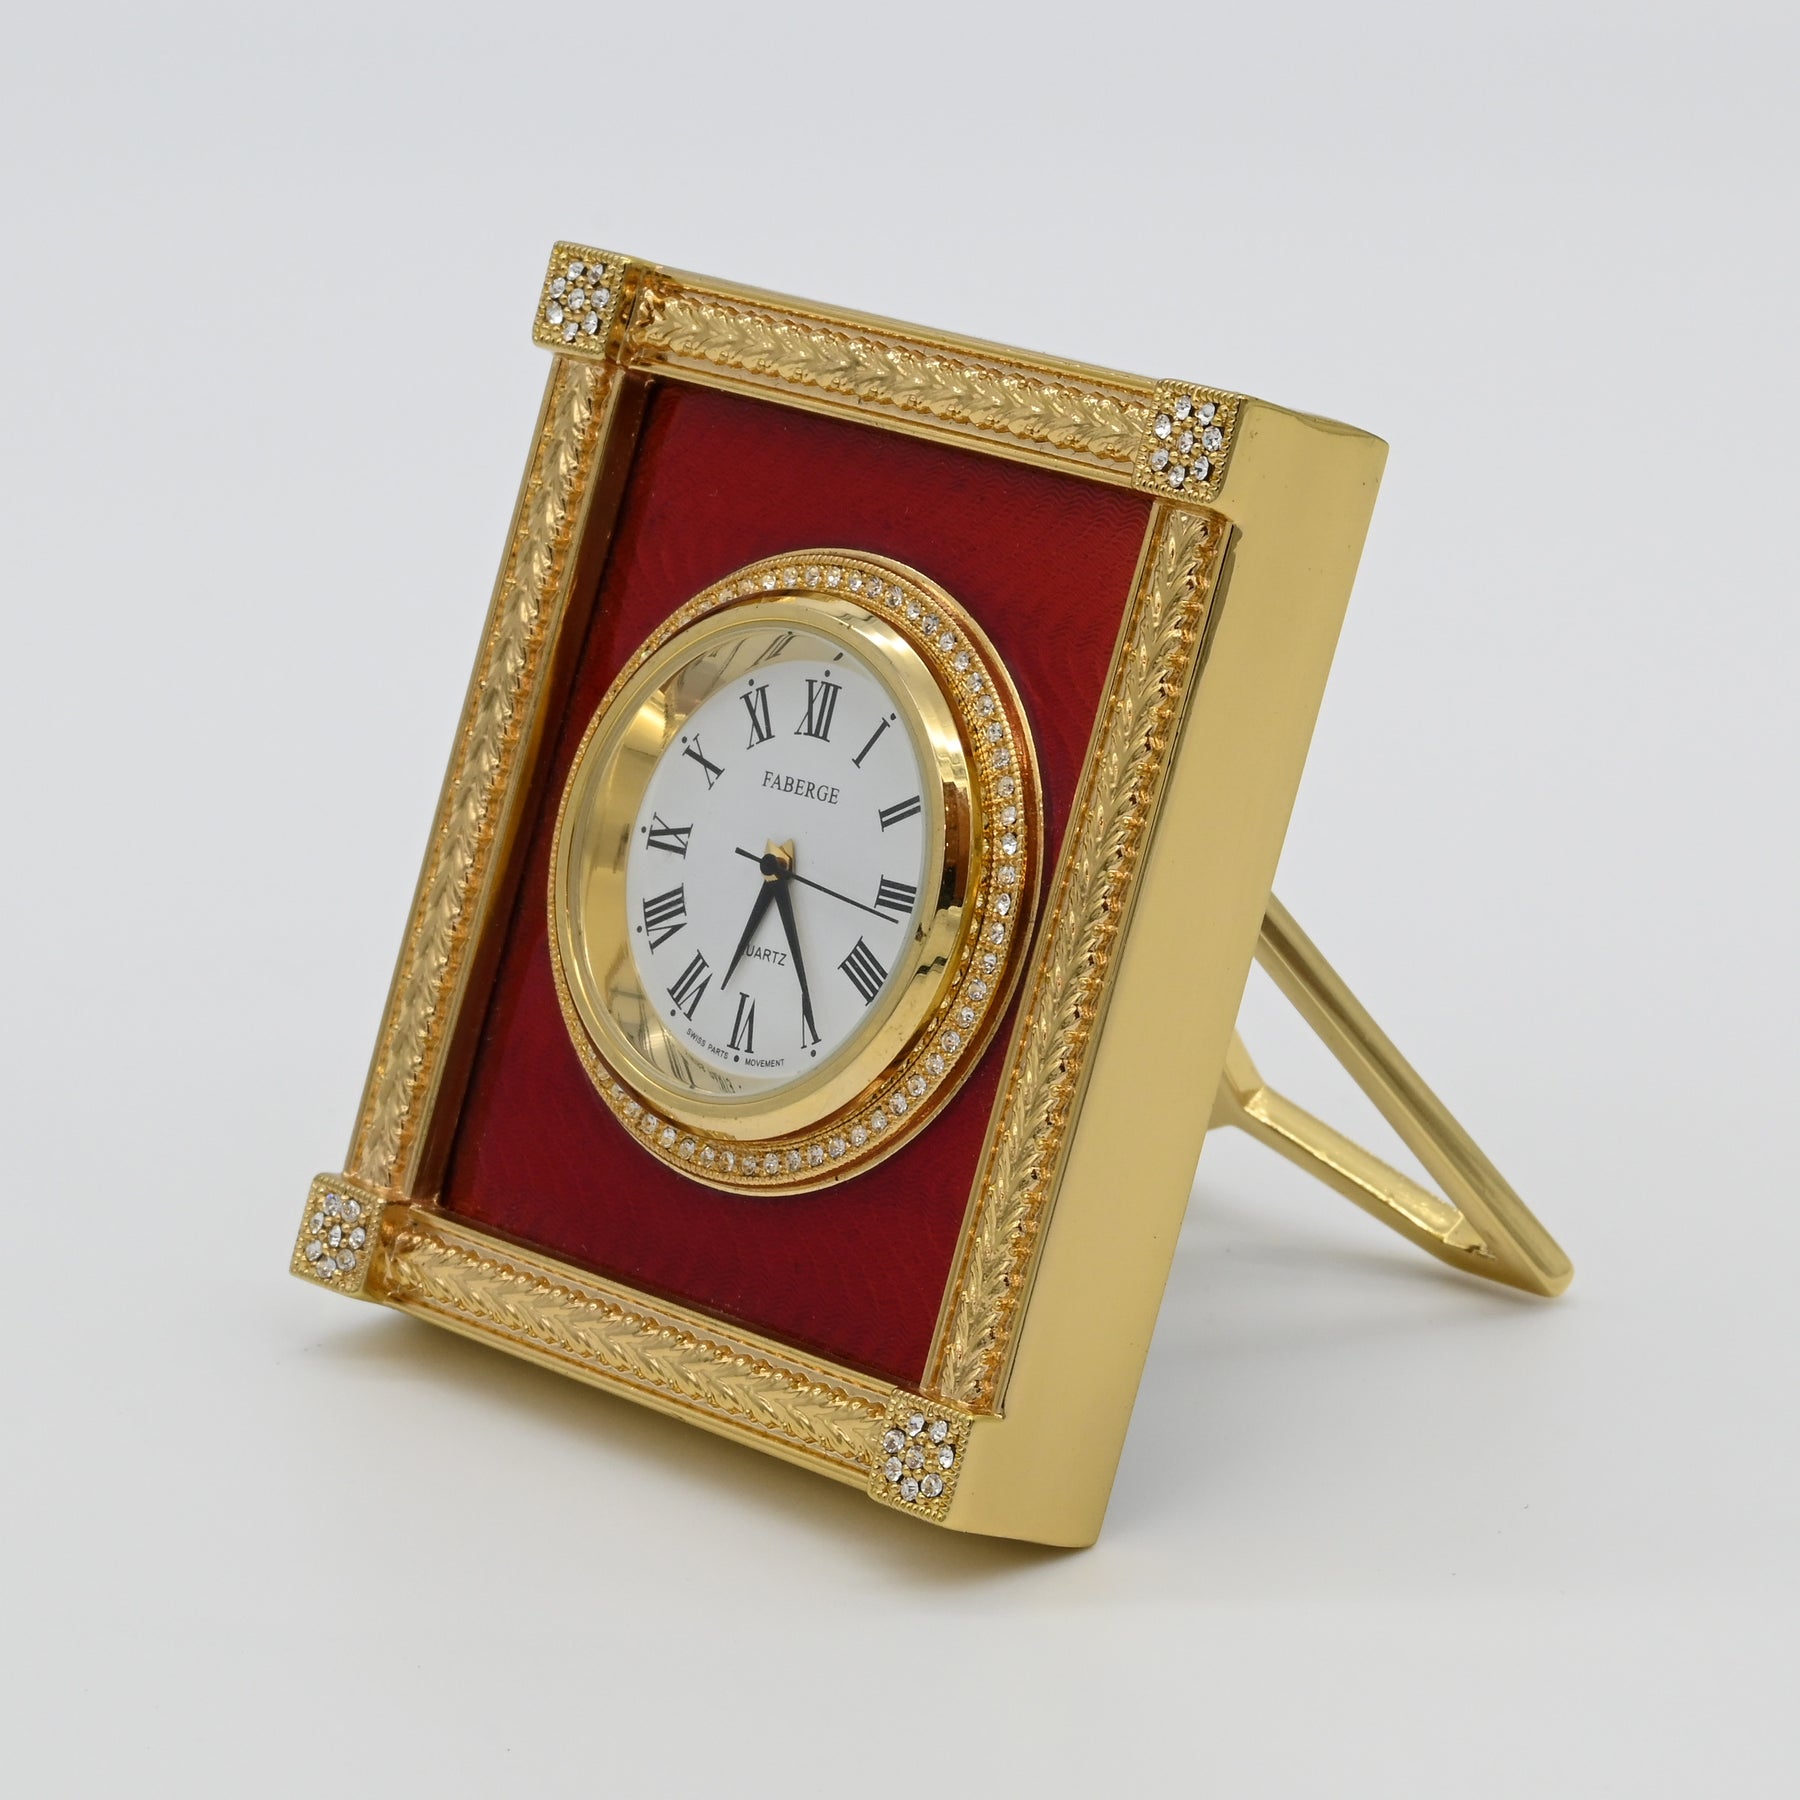 Imperial Faberge Jewelled Enamel Clock